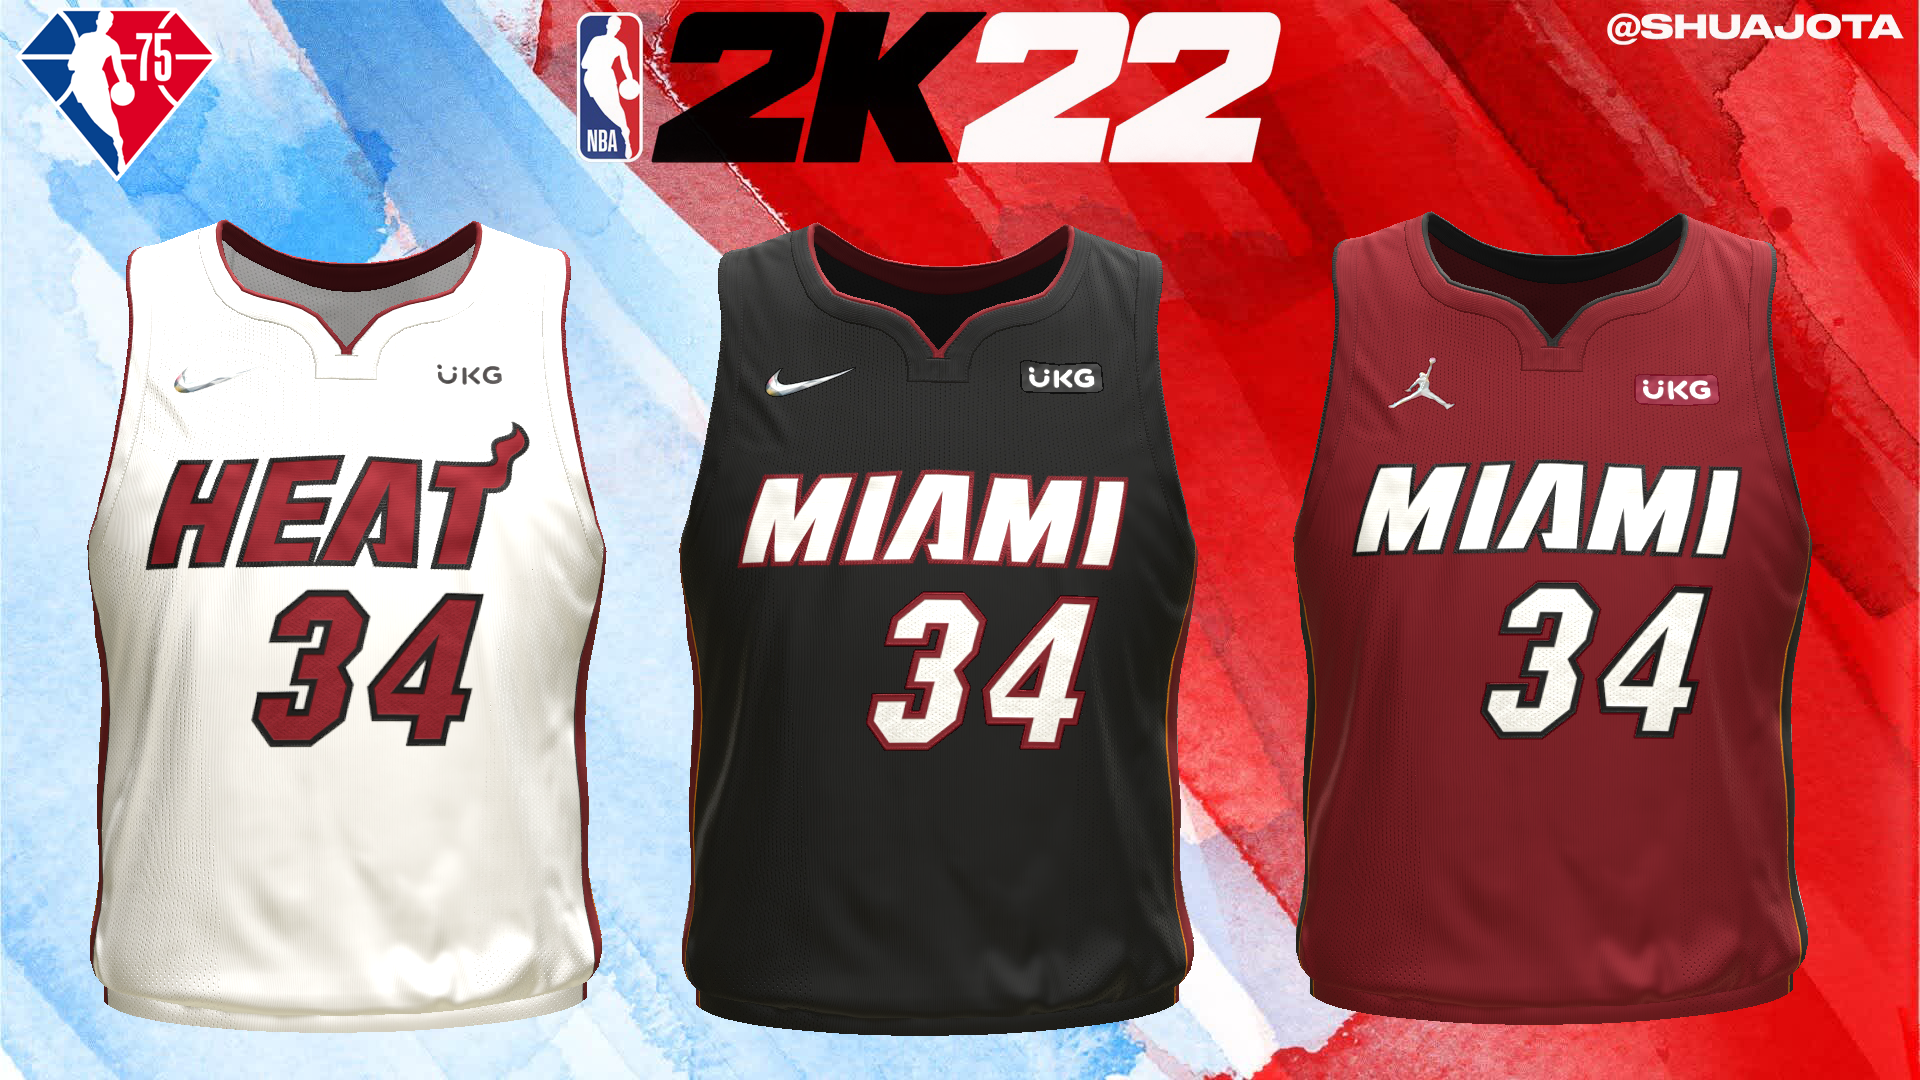 NBA 2K22 Miami Heat Next Gen Jerseys by GBAS - Shuajota: NBA 2K24